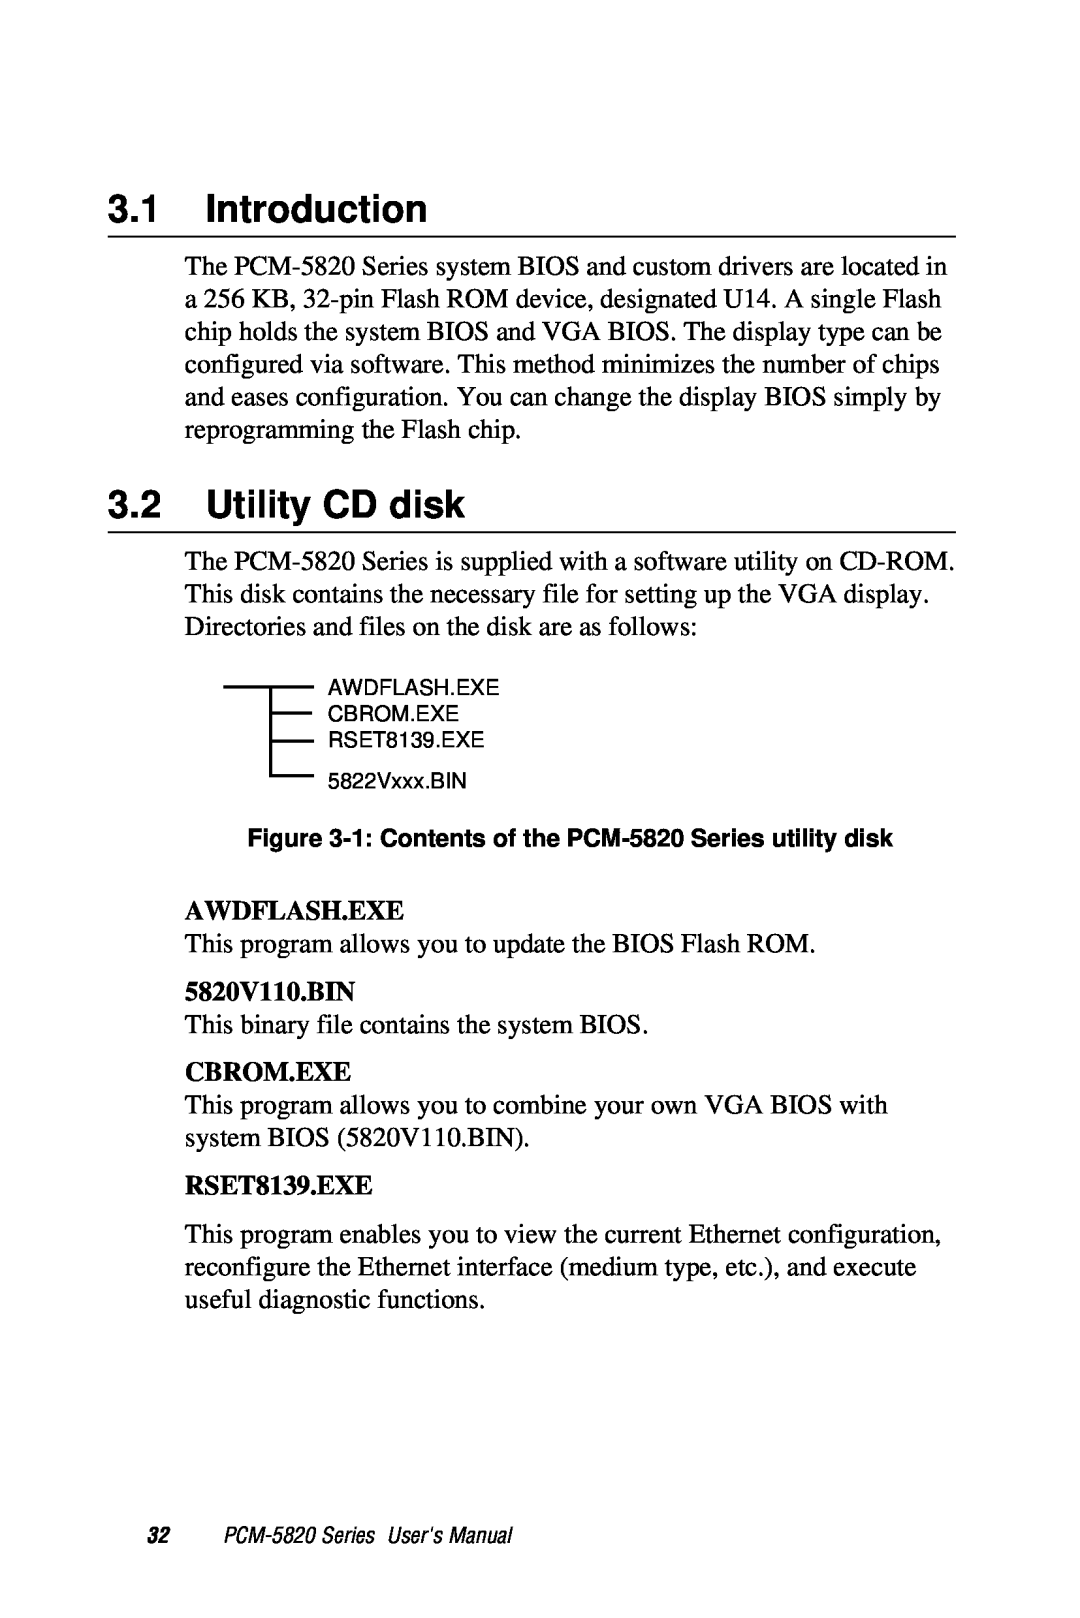 AMD PCM-5820 manual Introduction, Utility CD disk, Awdflash.Exe, 5820V110.BIN, Cbrom.Exe, RSET8139.EXE 